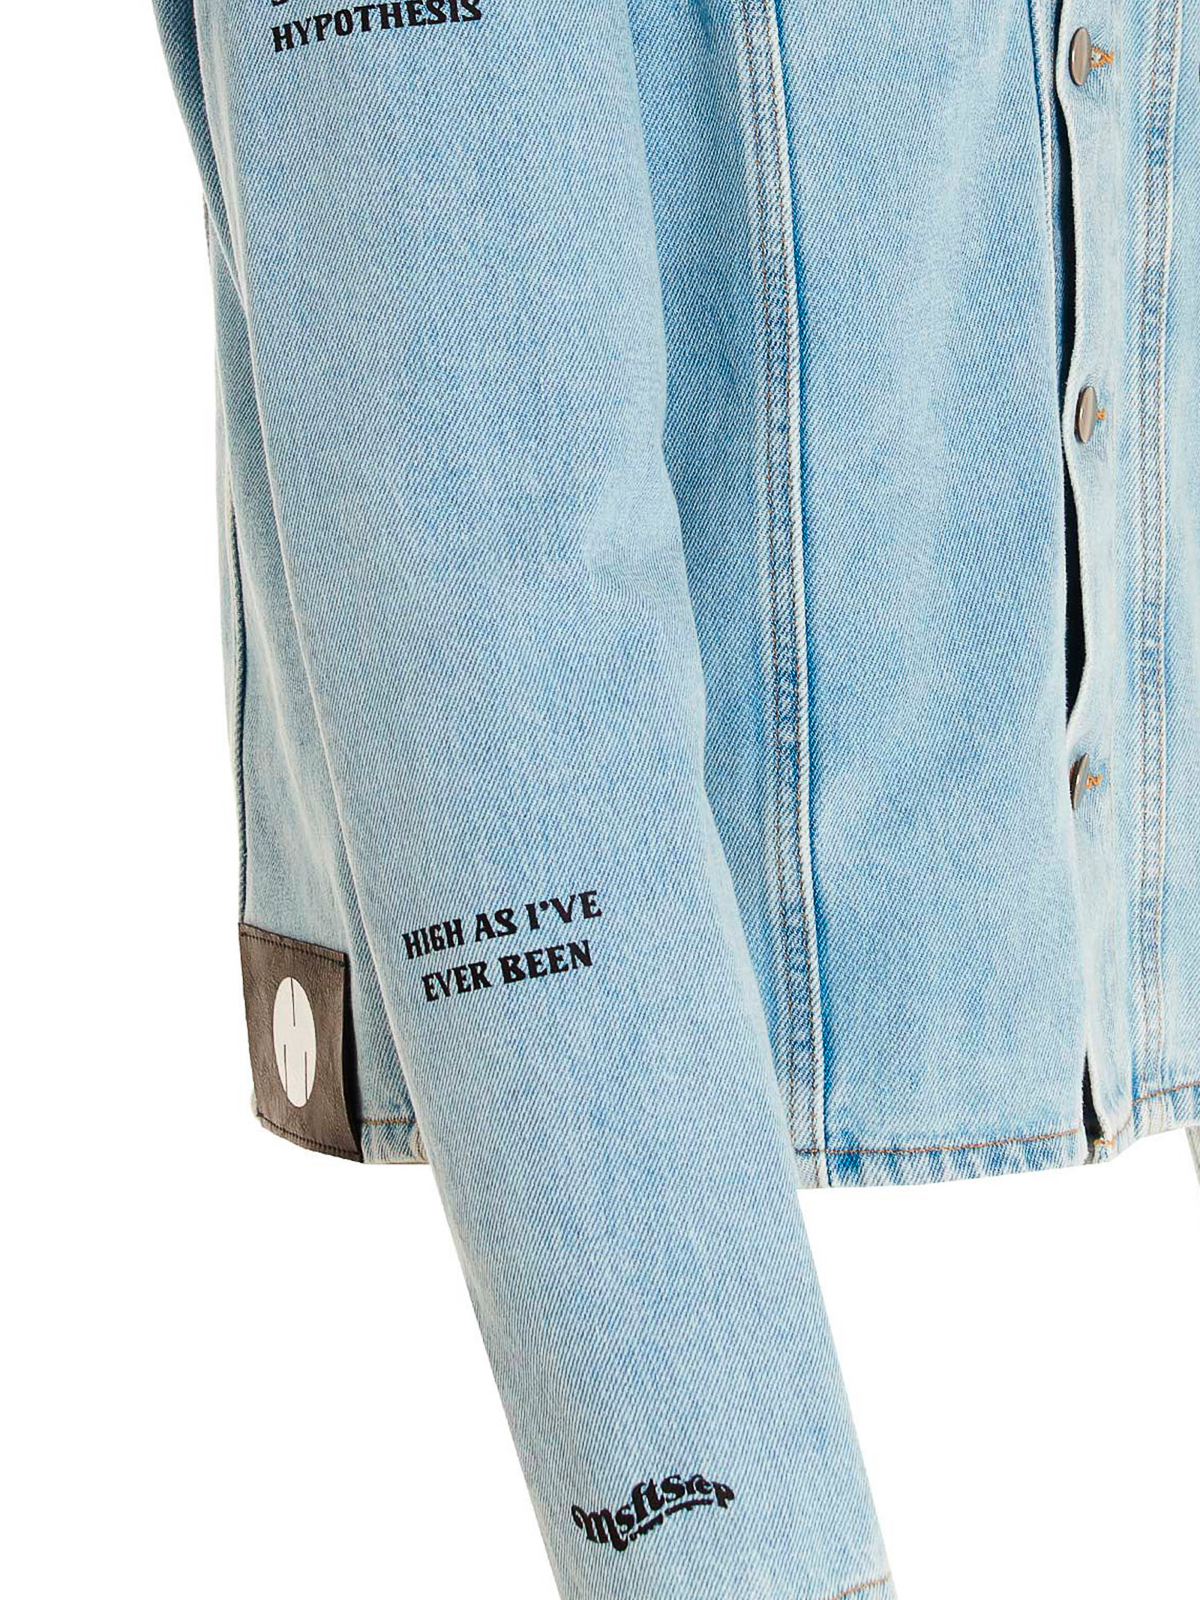 Shop Msftsrep Denim Jacket With Logo Print In Azul Claro